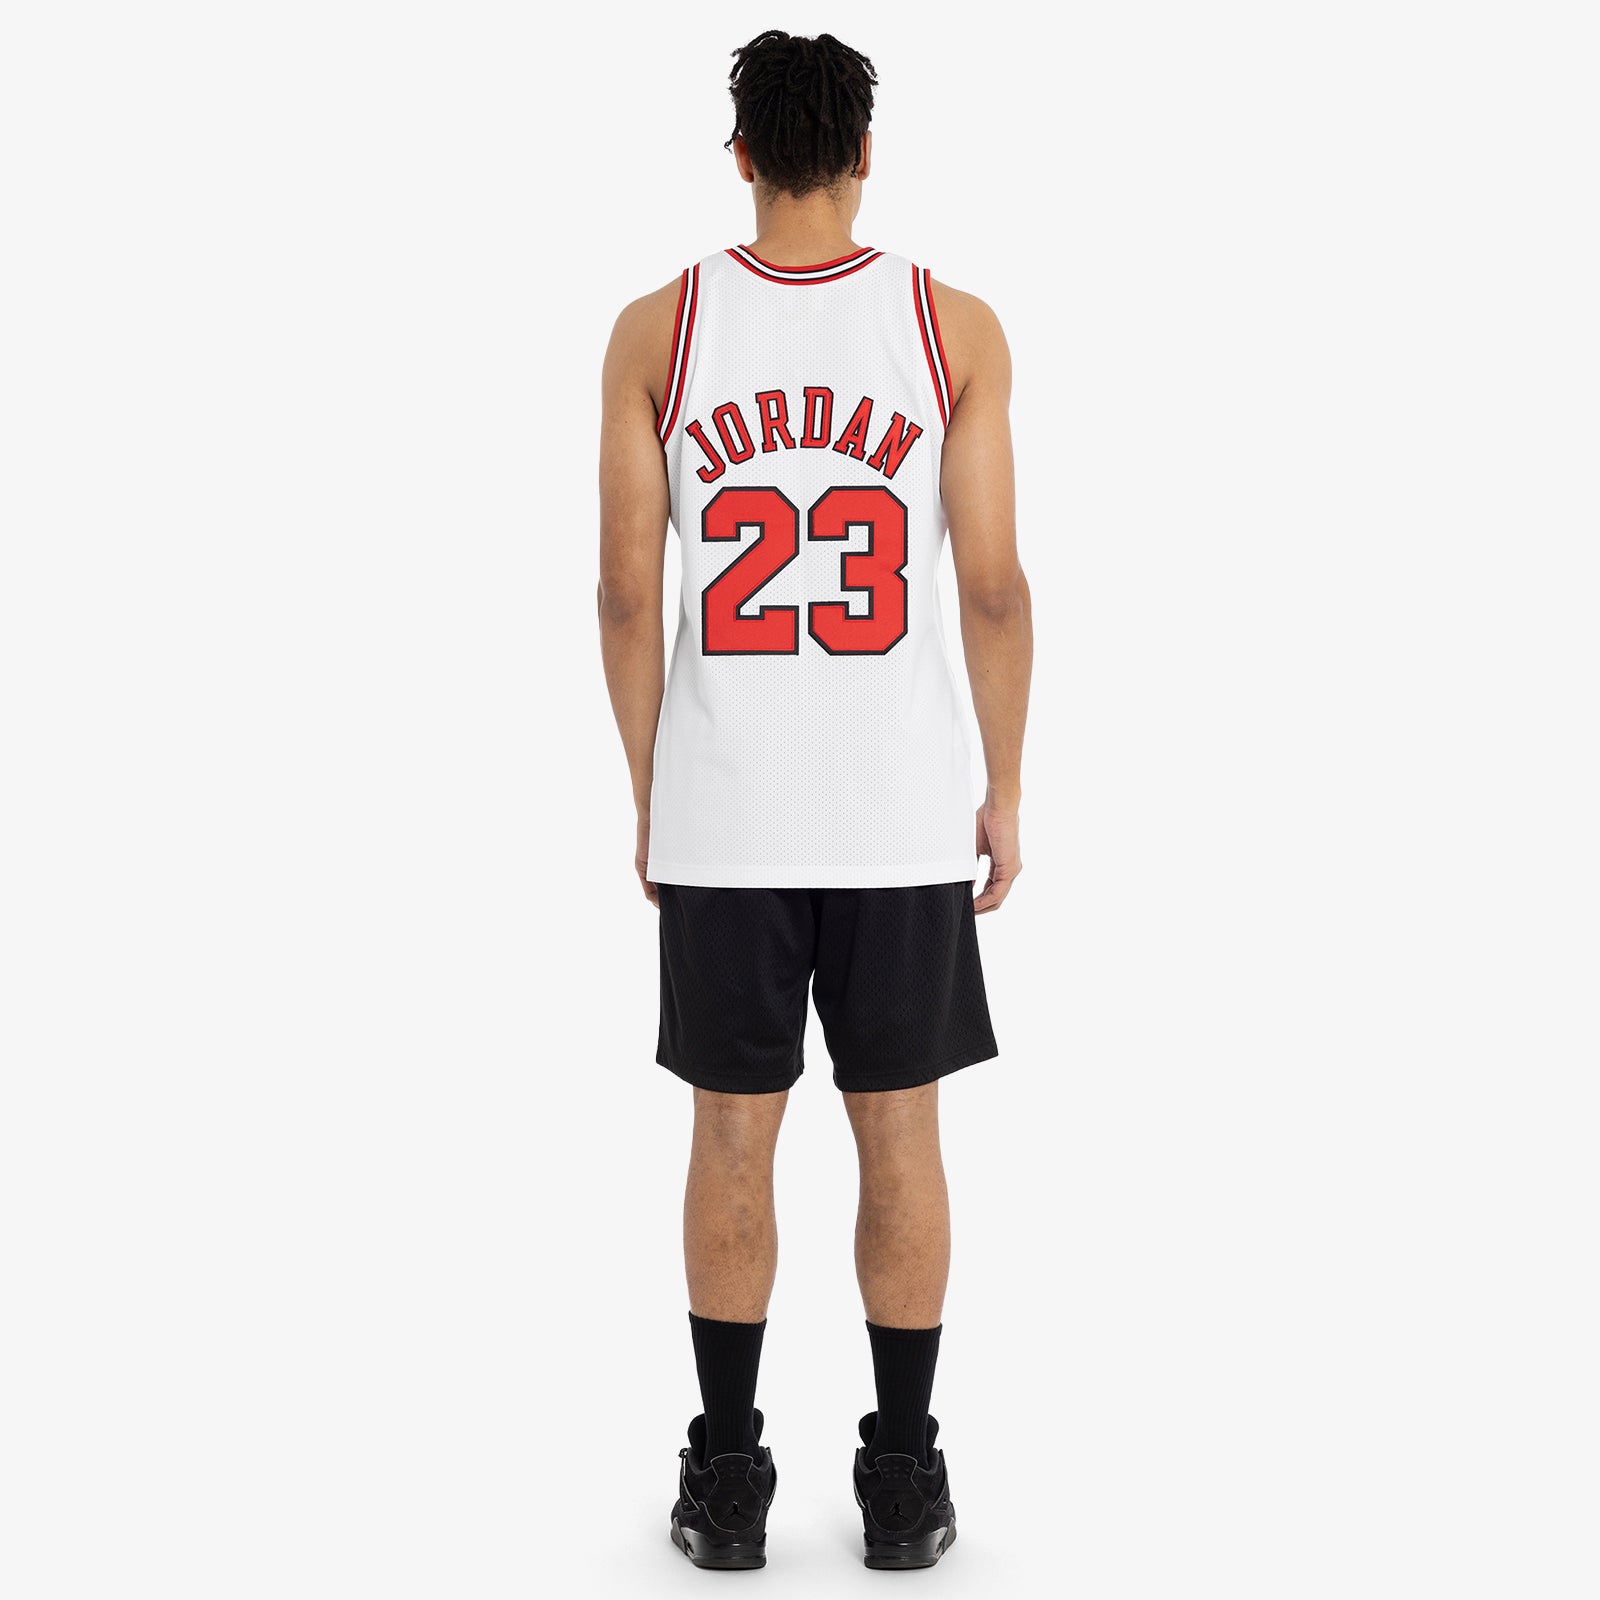 Michael Jordan 97-98 Authentic Hardwood Classic NBA Jersey